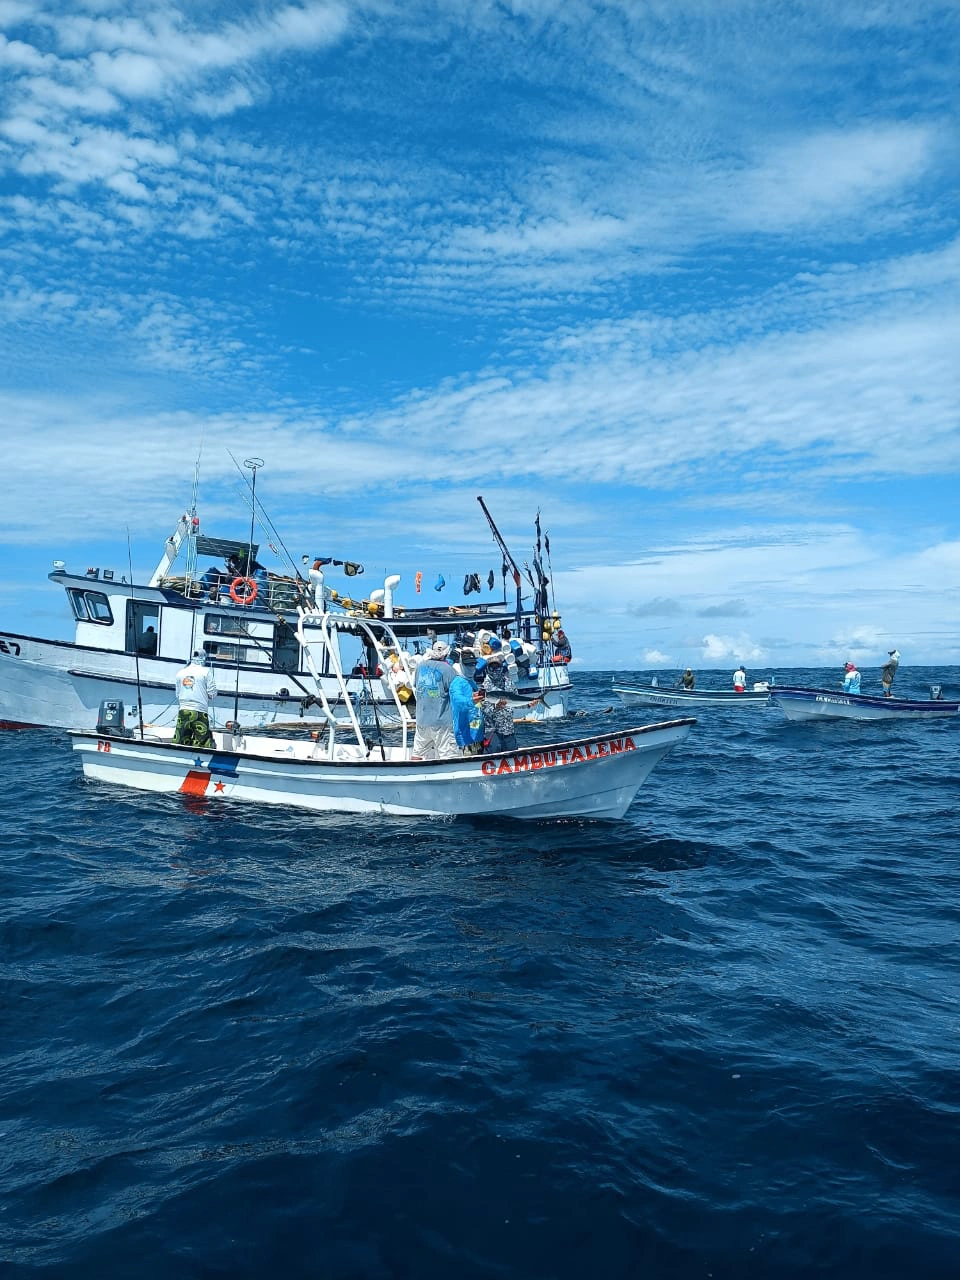 "La Flota de Pesca Cambutal: Experiencia Superior en Pesca Deportiva